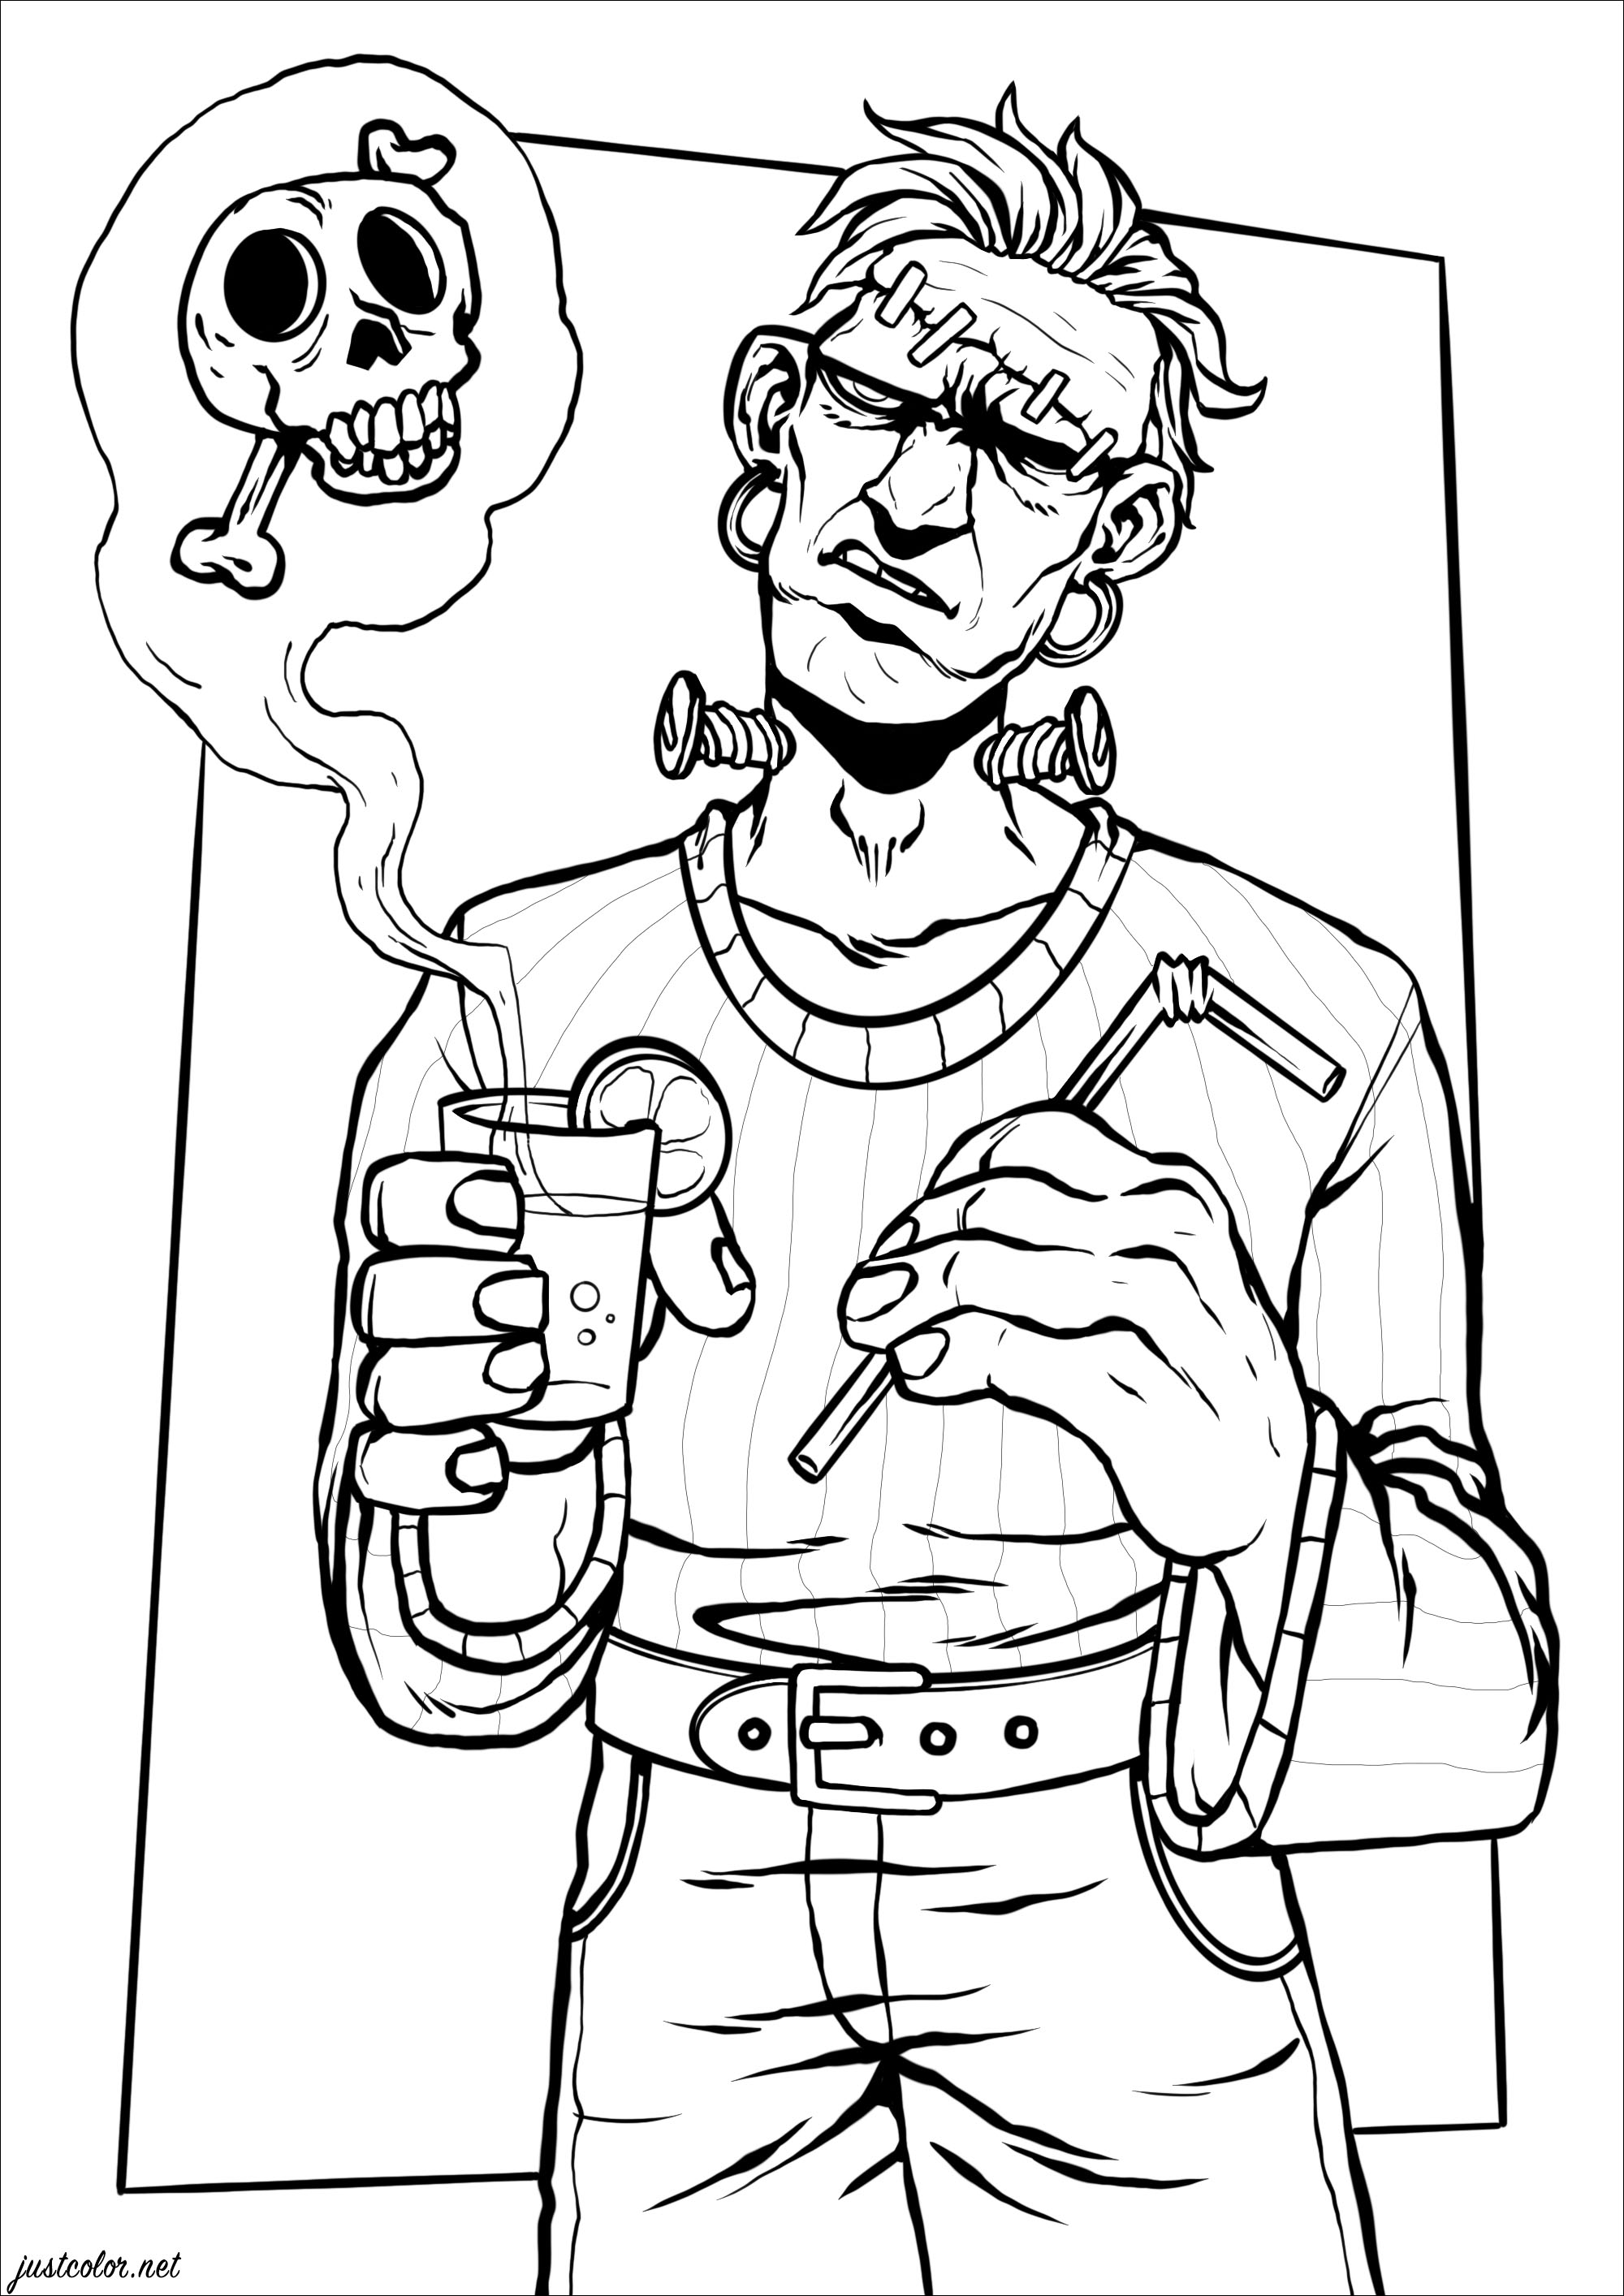 The famous Frankenstein creature drinking a 'deadly' drink !, Artist : SPZ artworks